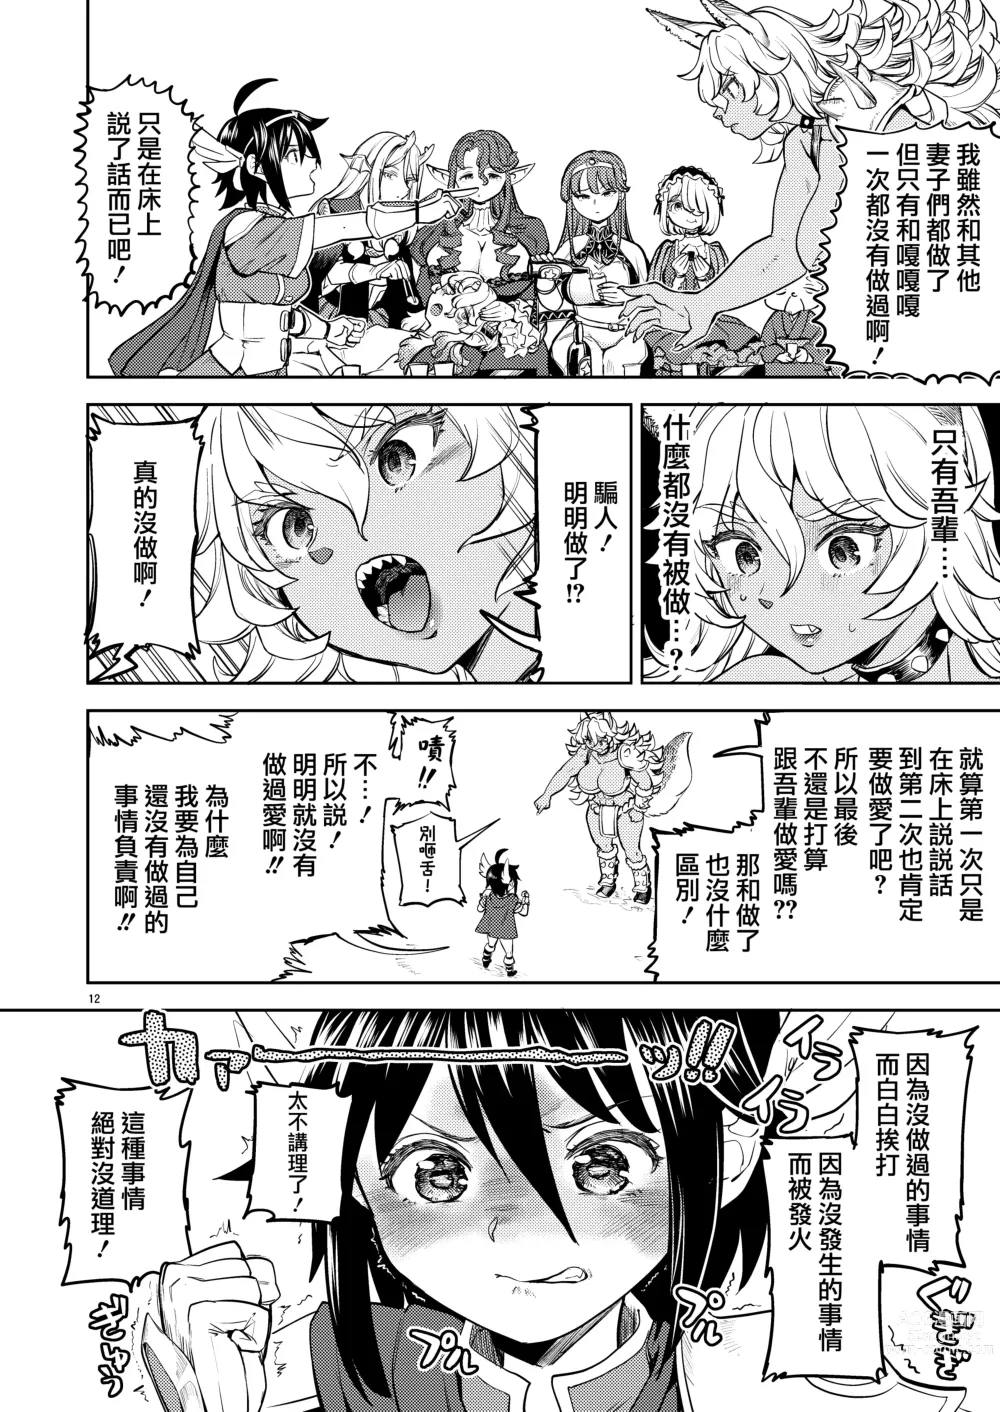 Page 214 of manga 我轉生成爲女勇者后魔族的妻子居然有5人 1-6